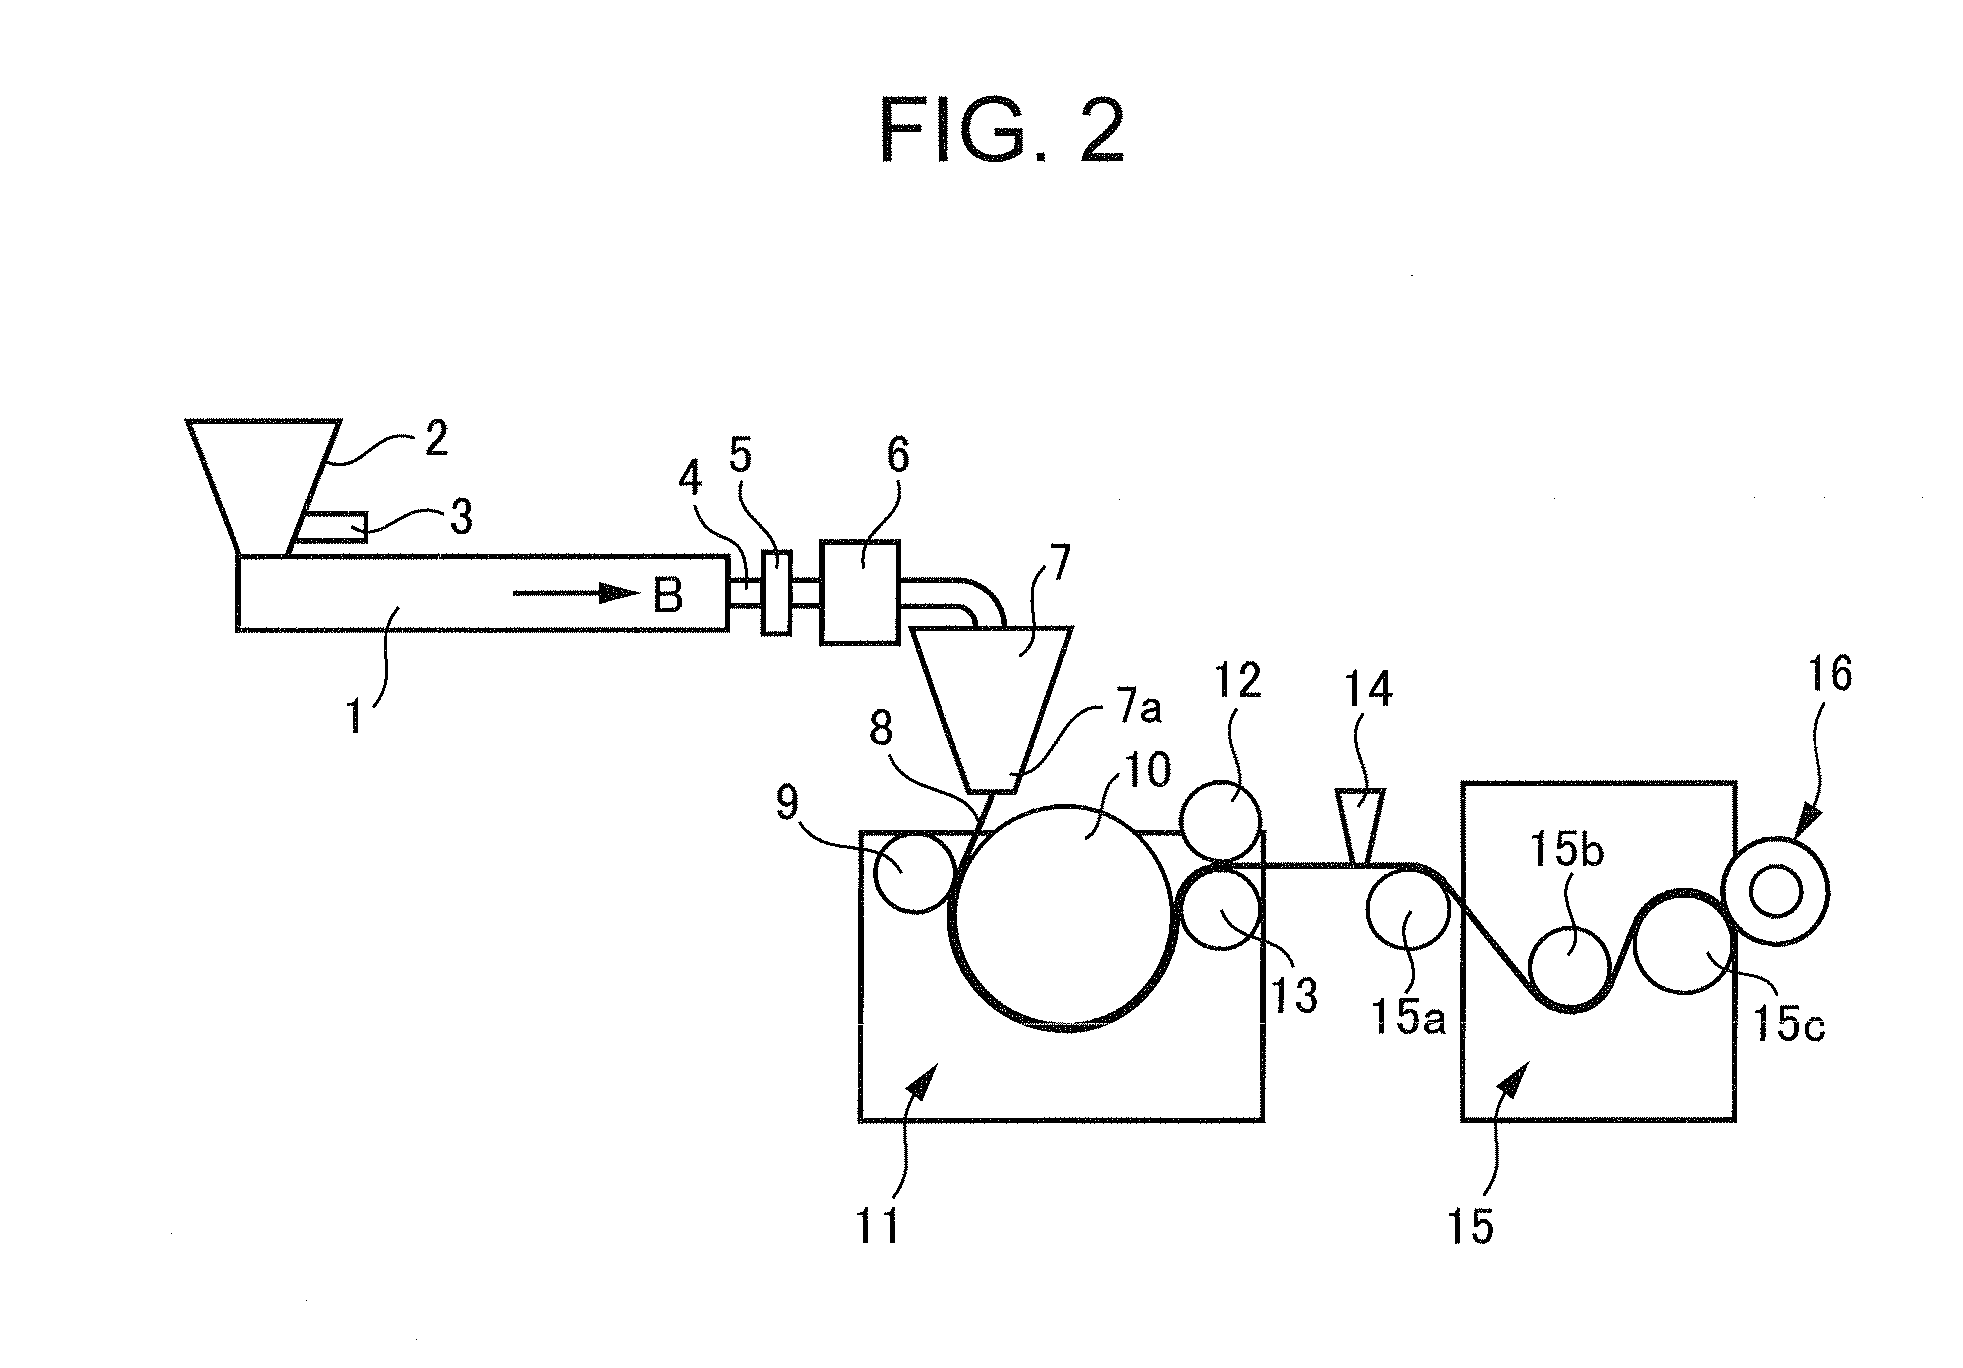 Method of manufacturing film for film capacitor and film for film capacitor